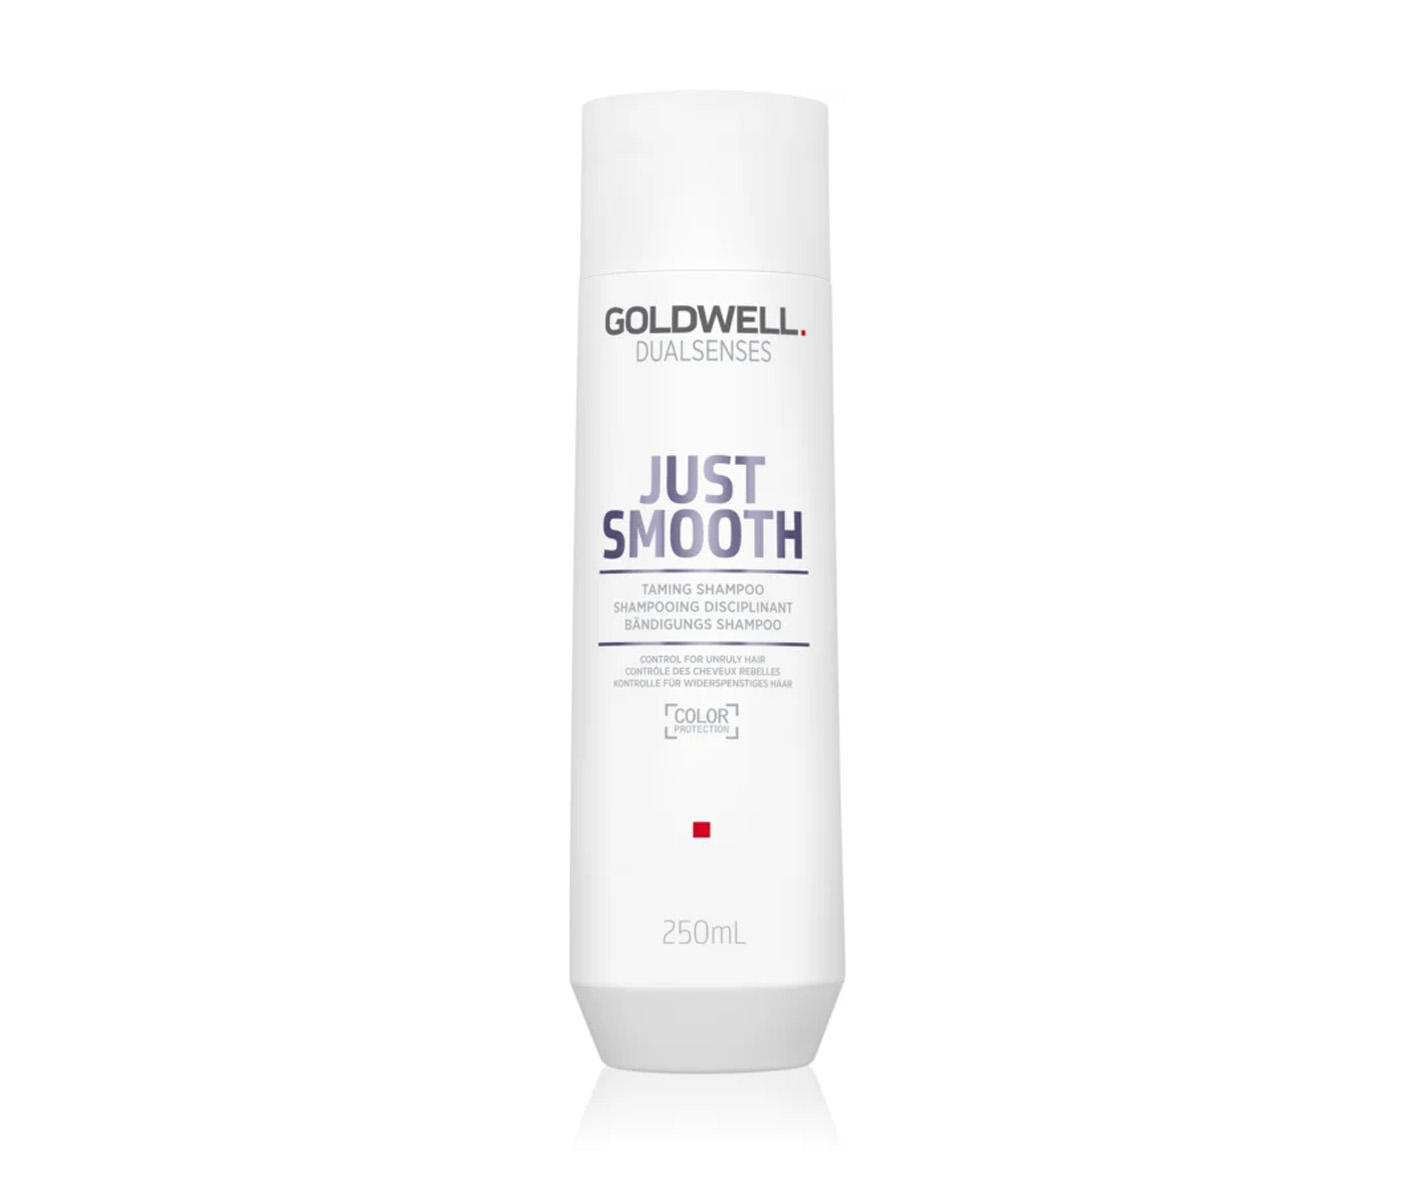 Goldwell Dualsenses Just Smooth, șampon pentru păr creț și vopsit